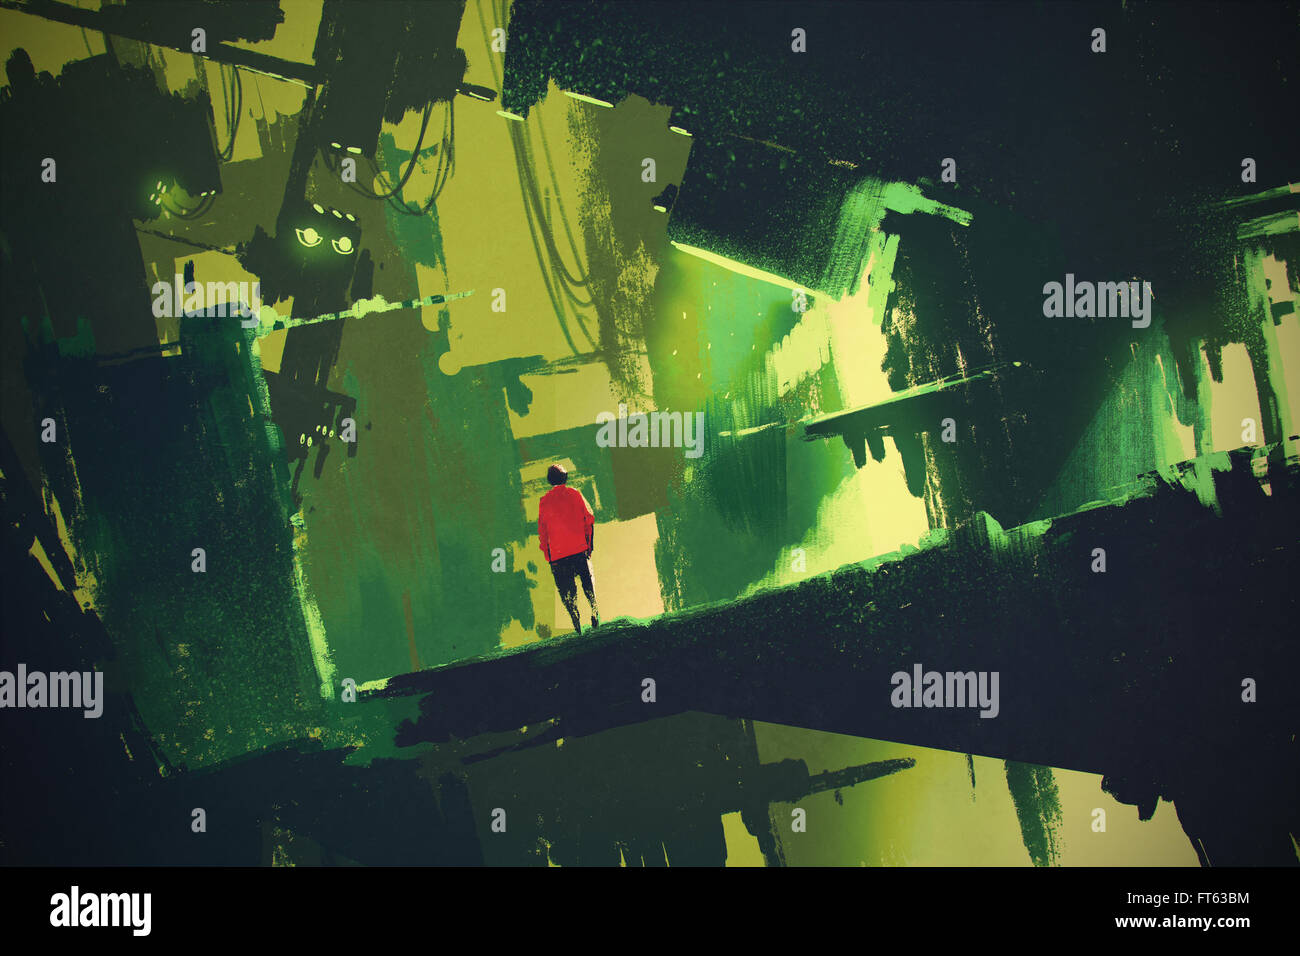 man walking into abstract green city,illustration Stock Photo